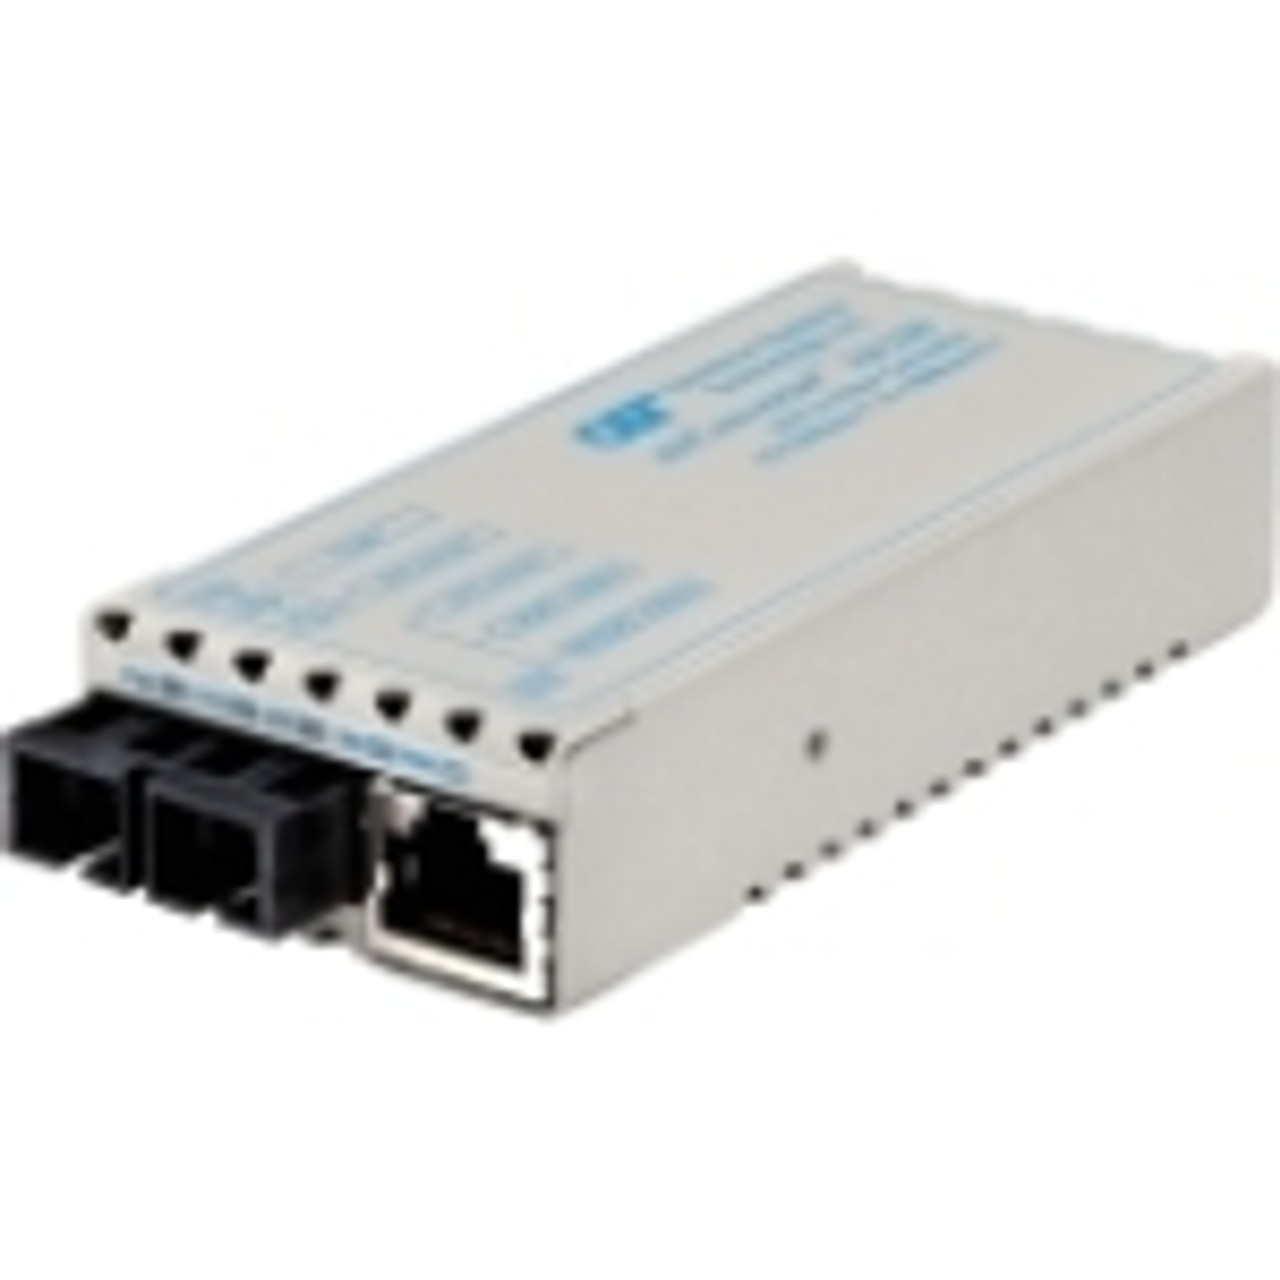 1122-0-2 miConverter 10/100 Plus Ethernet Fiber Media Converter RJ45 SC Multimode 5km 1 x 10/100BASE-TX, 1 x 100BASE-FX, Univ. AC Powered,